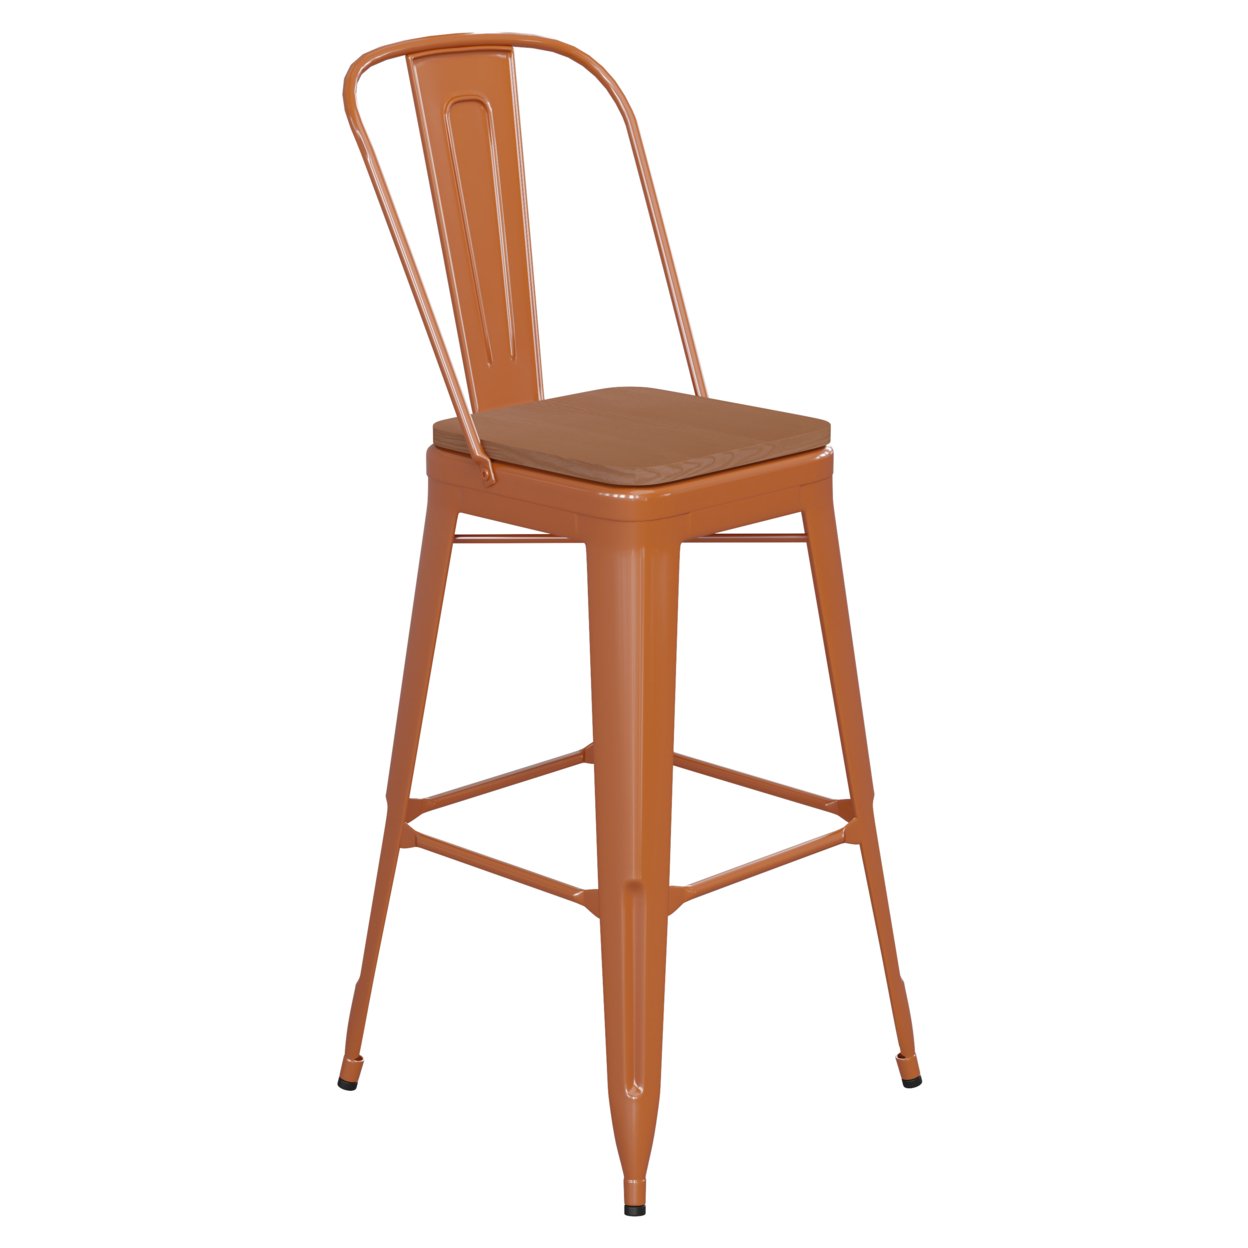 30 Inch Metal Chair, Curved Design Back, Polyresin Sleek Seat, Rust Orange